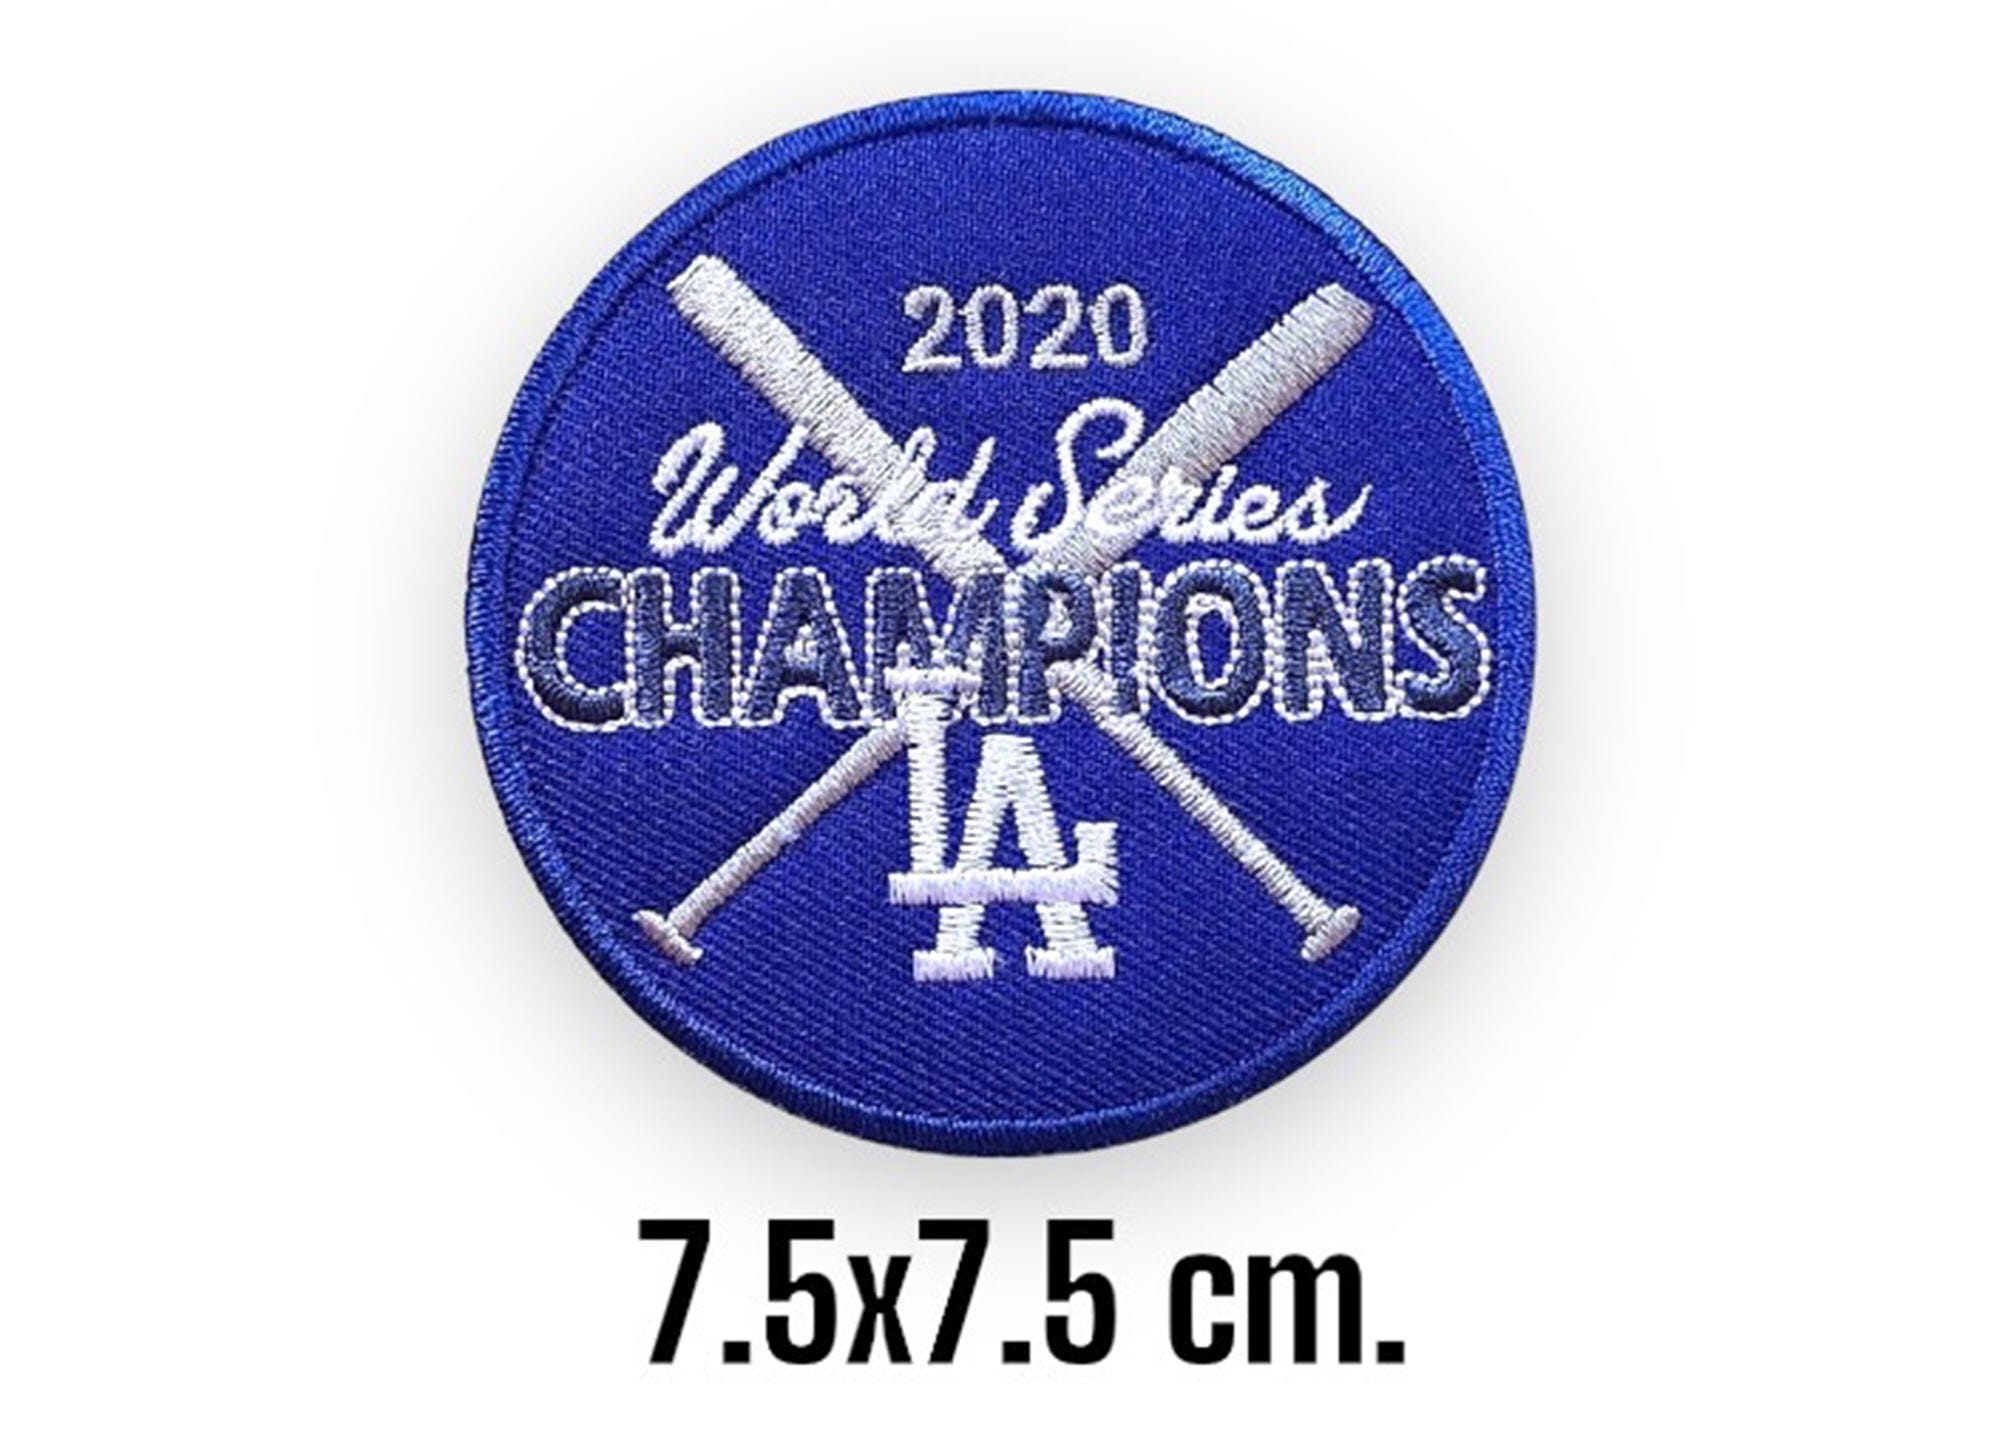 Dodgers World Series Champions 2020 Circle 7.5x7.5 Cm 